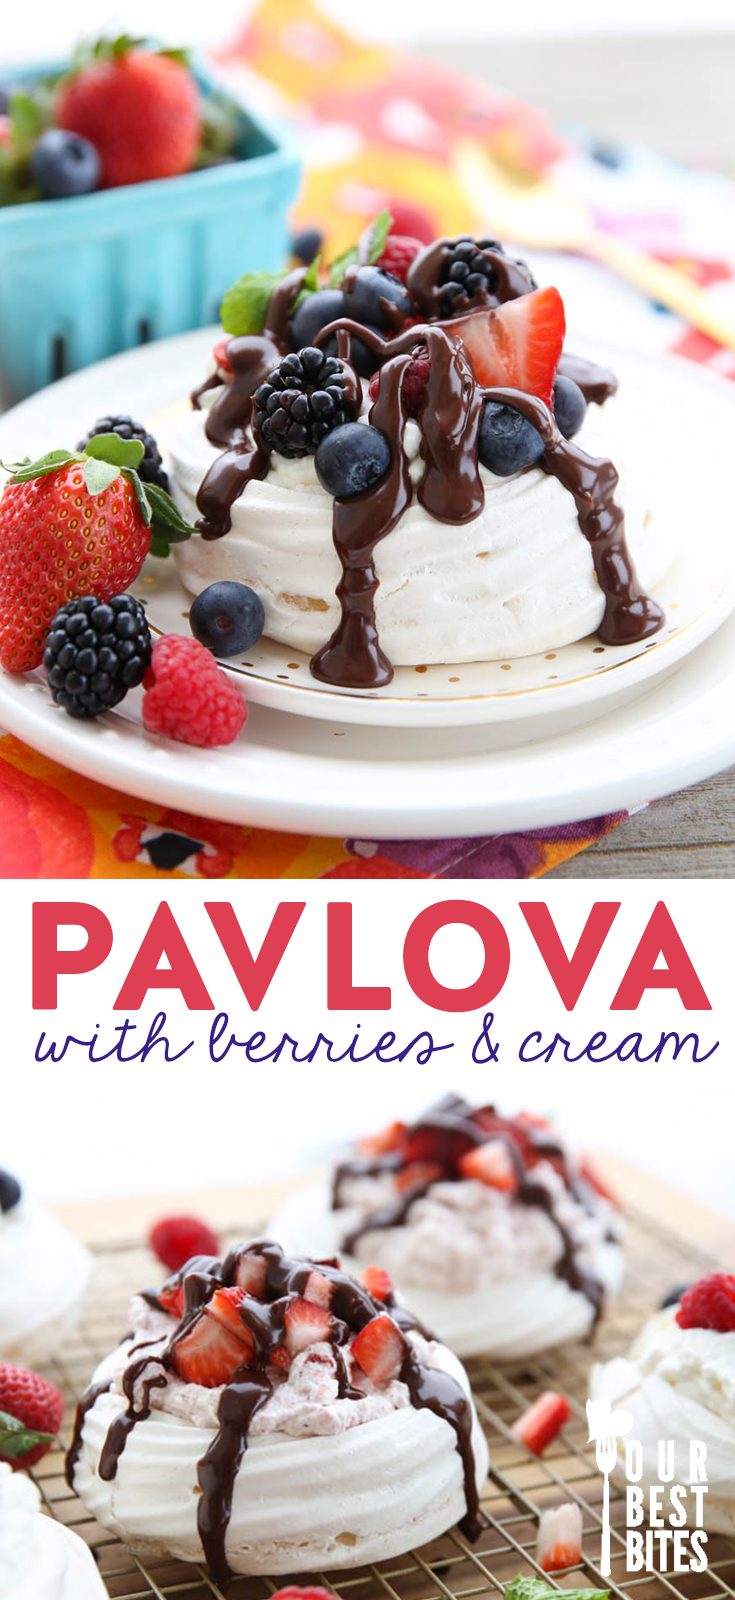 Pavlova-from-our-best-bites